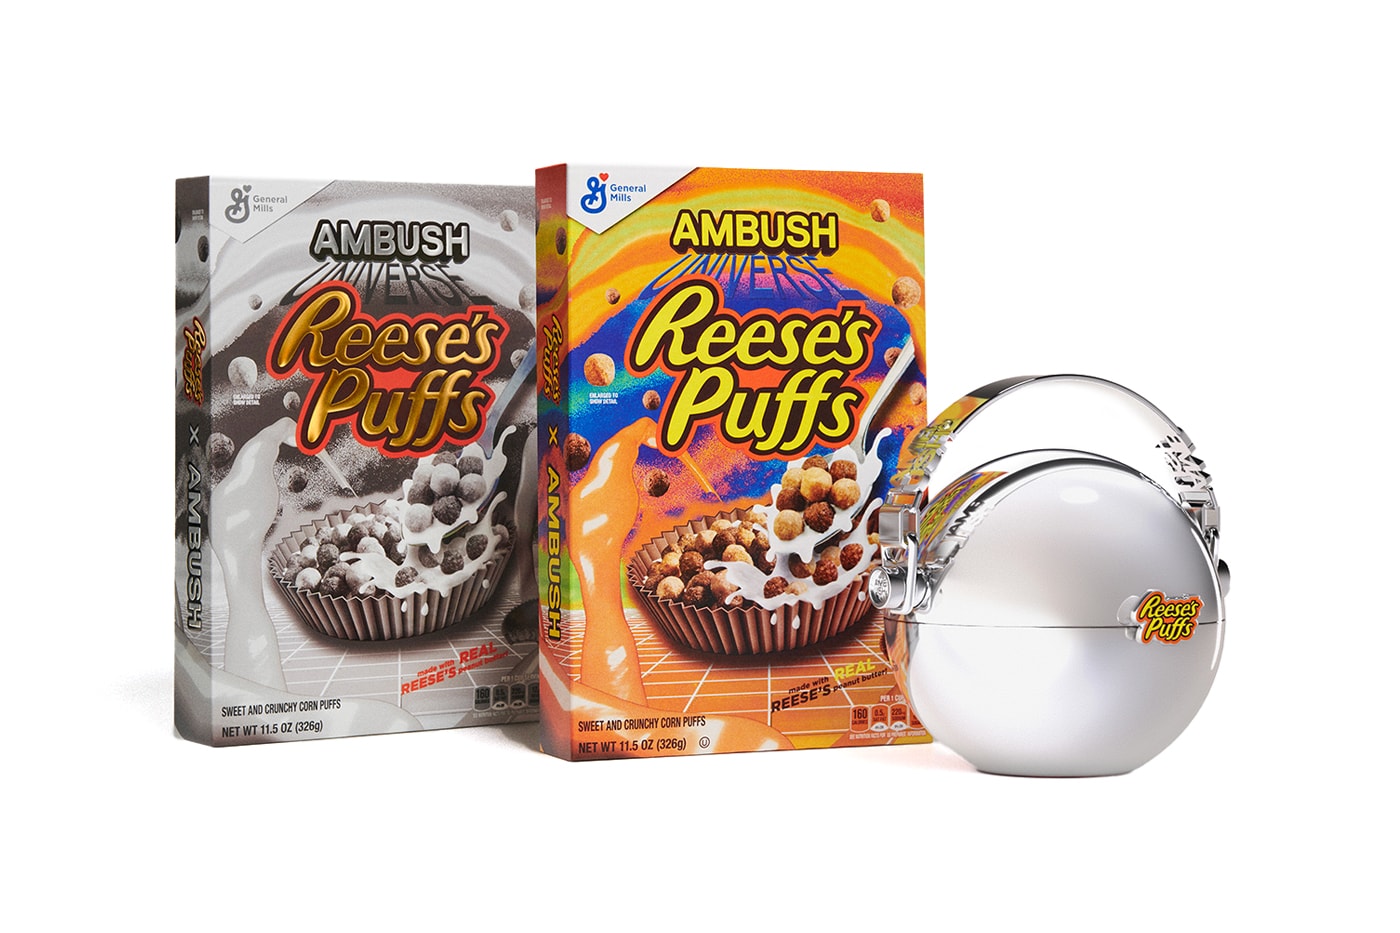 AMBUSH Reese's Puffs Breakfastverse Chrome Puff Cereal Box Release Info Date Buy Price Yoon Ahn General Mills